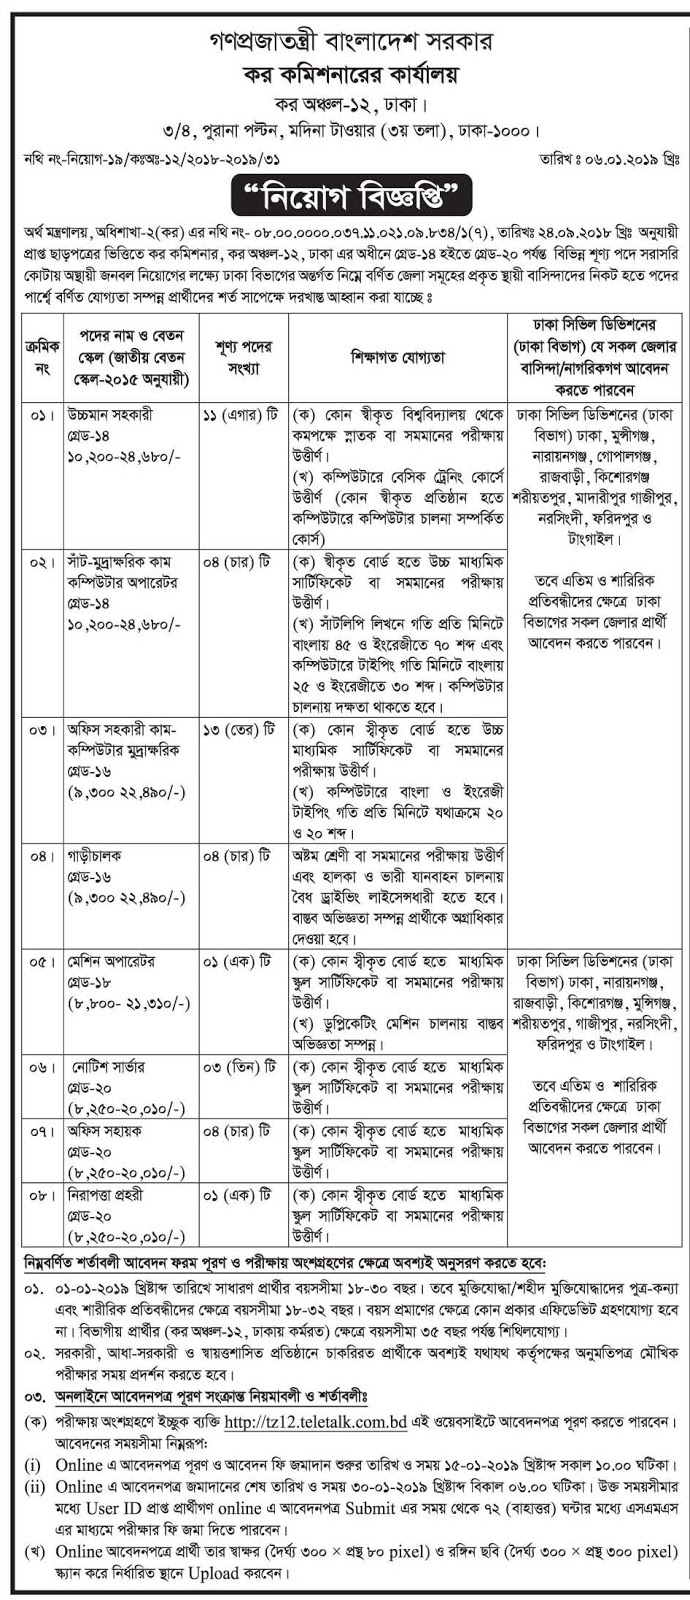 Taxes Zone-12, Dhaka Job Circular 2019